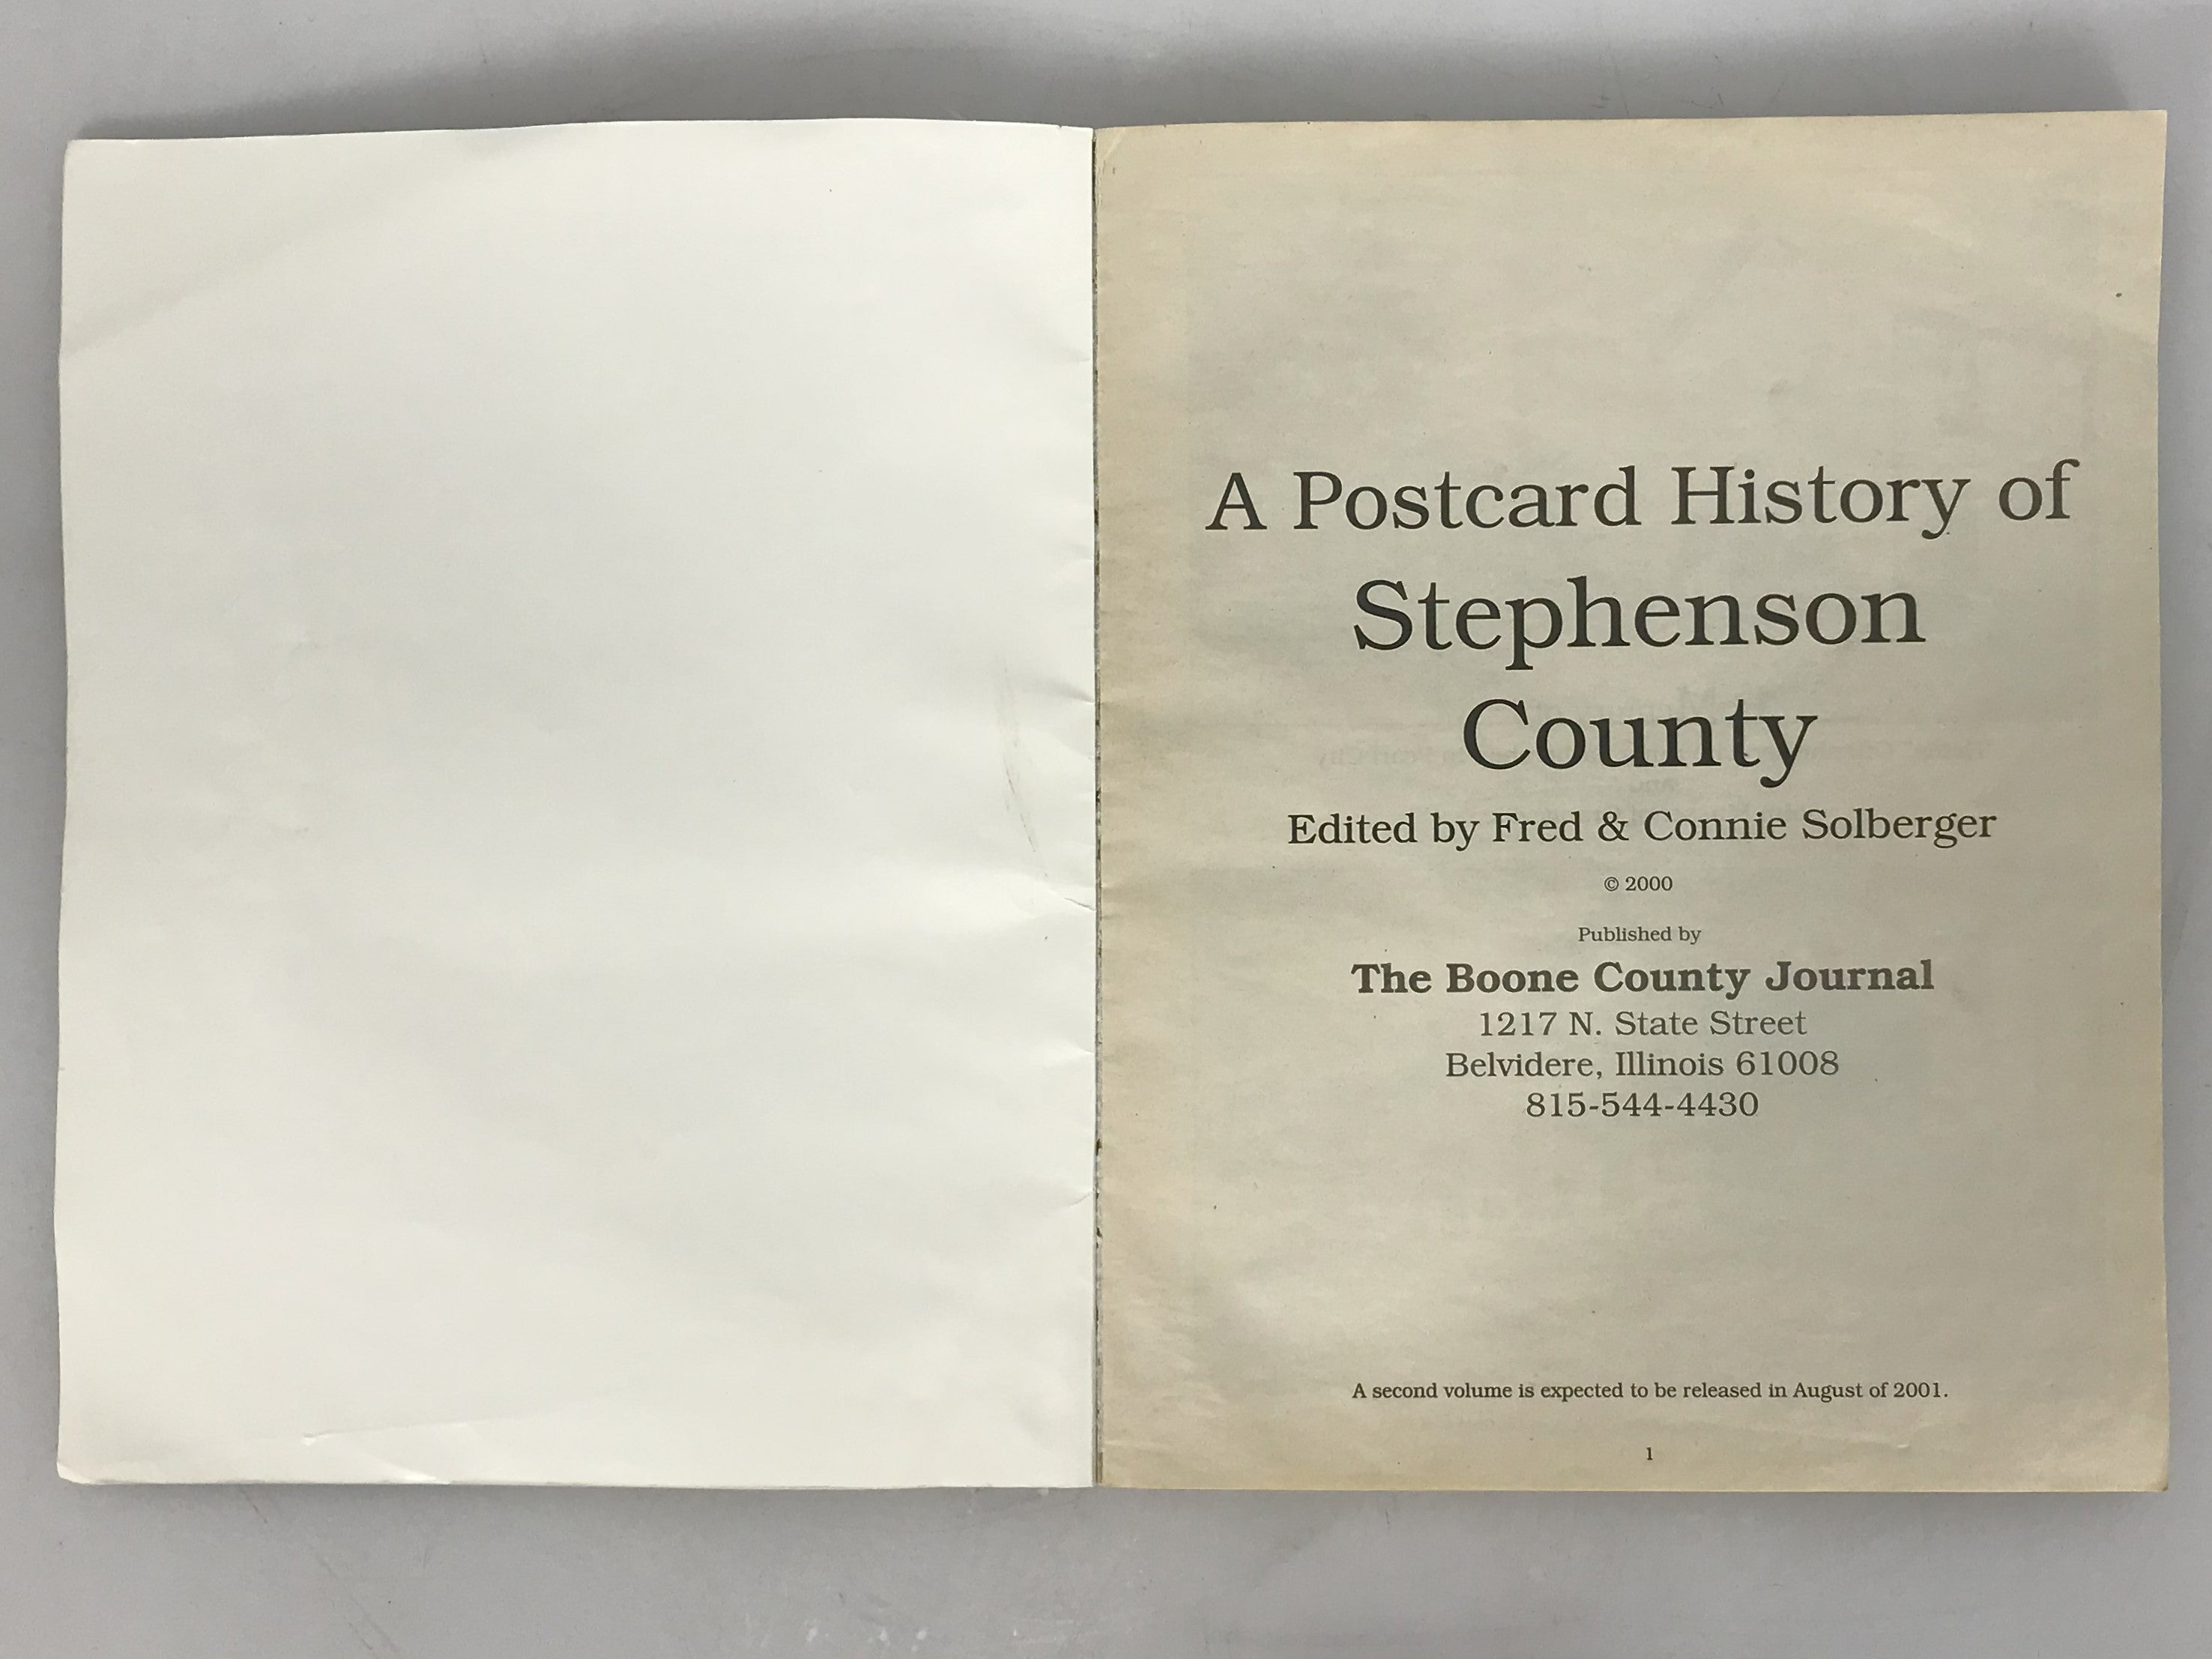 A Postcard History of Stephenson County Illinois 2000